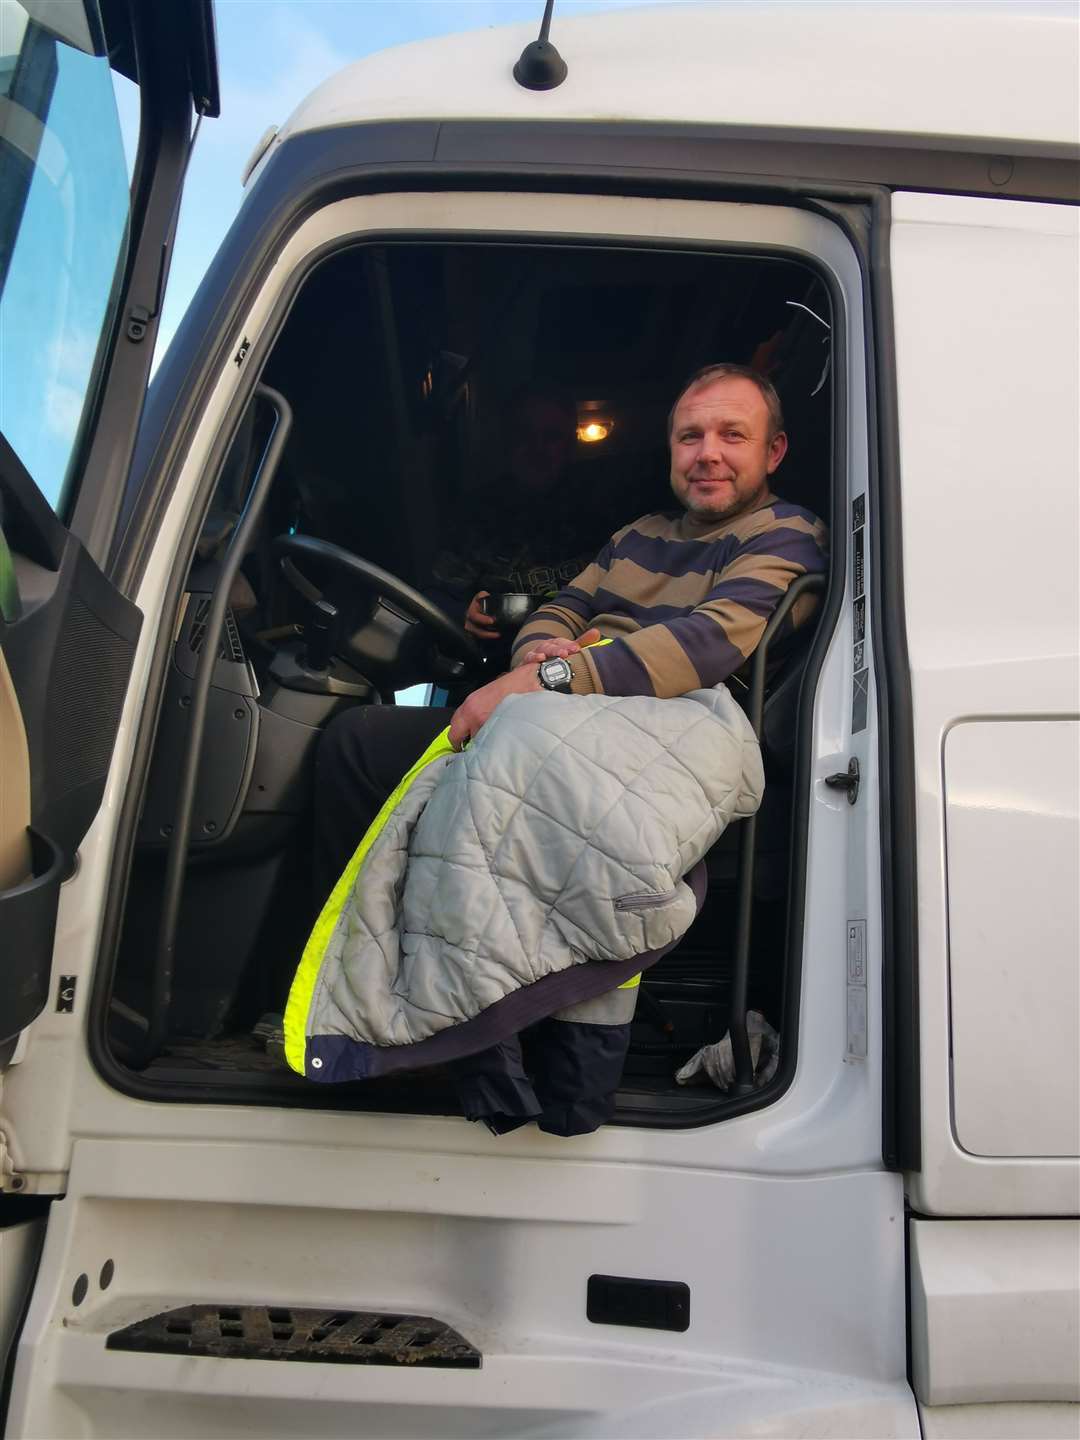 A trucker kept waiting at Manston, Christmas Eve